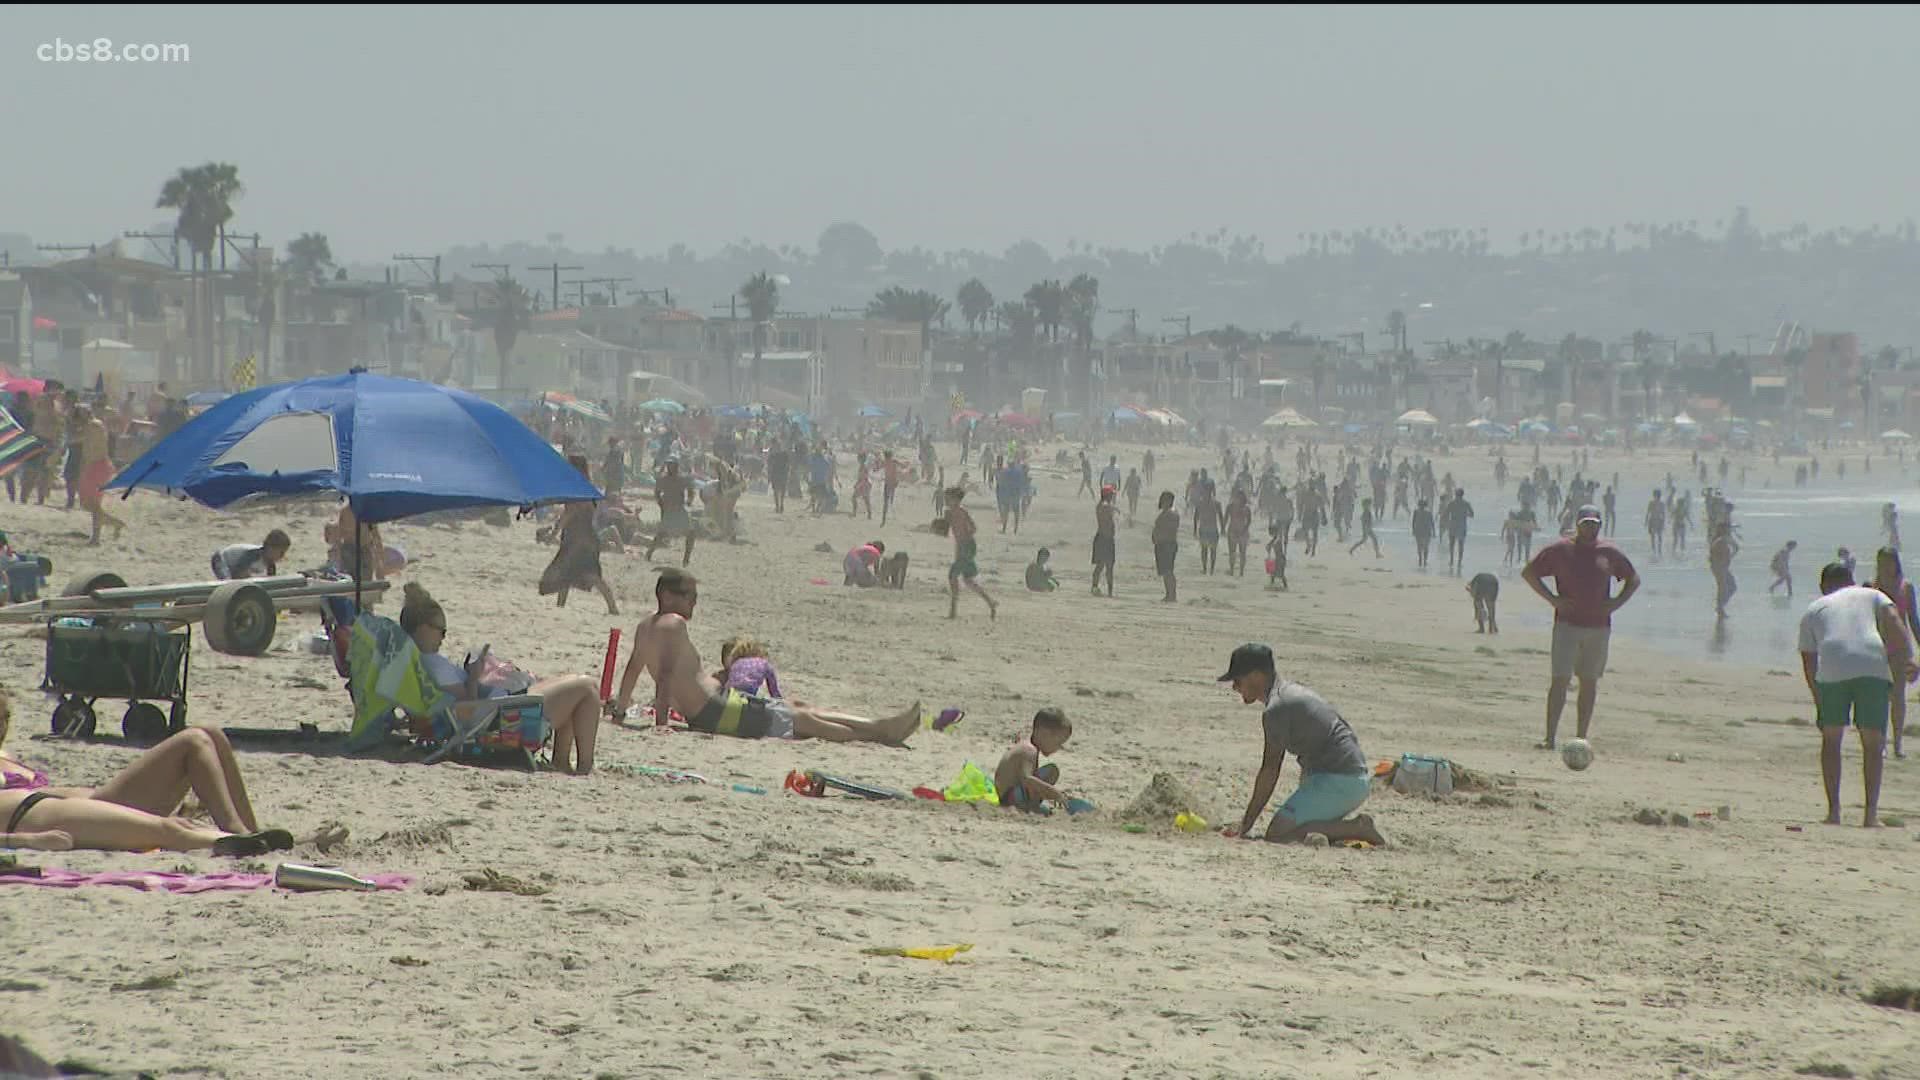 Labor Day weekend draws big crowds at San Diego beaches